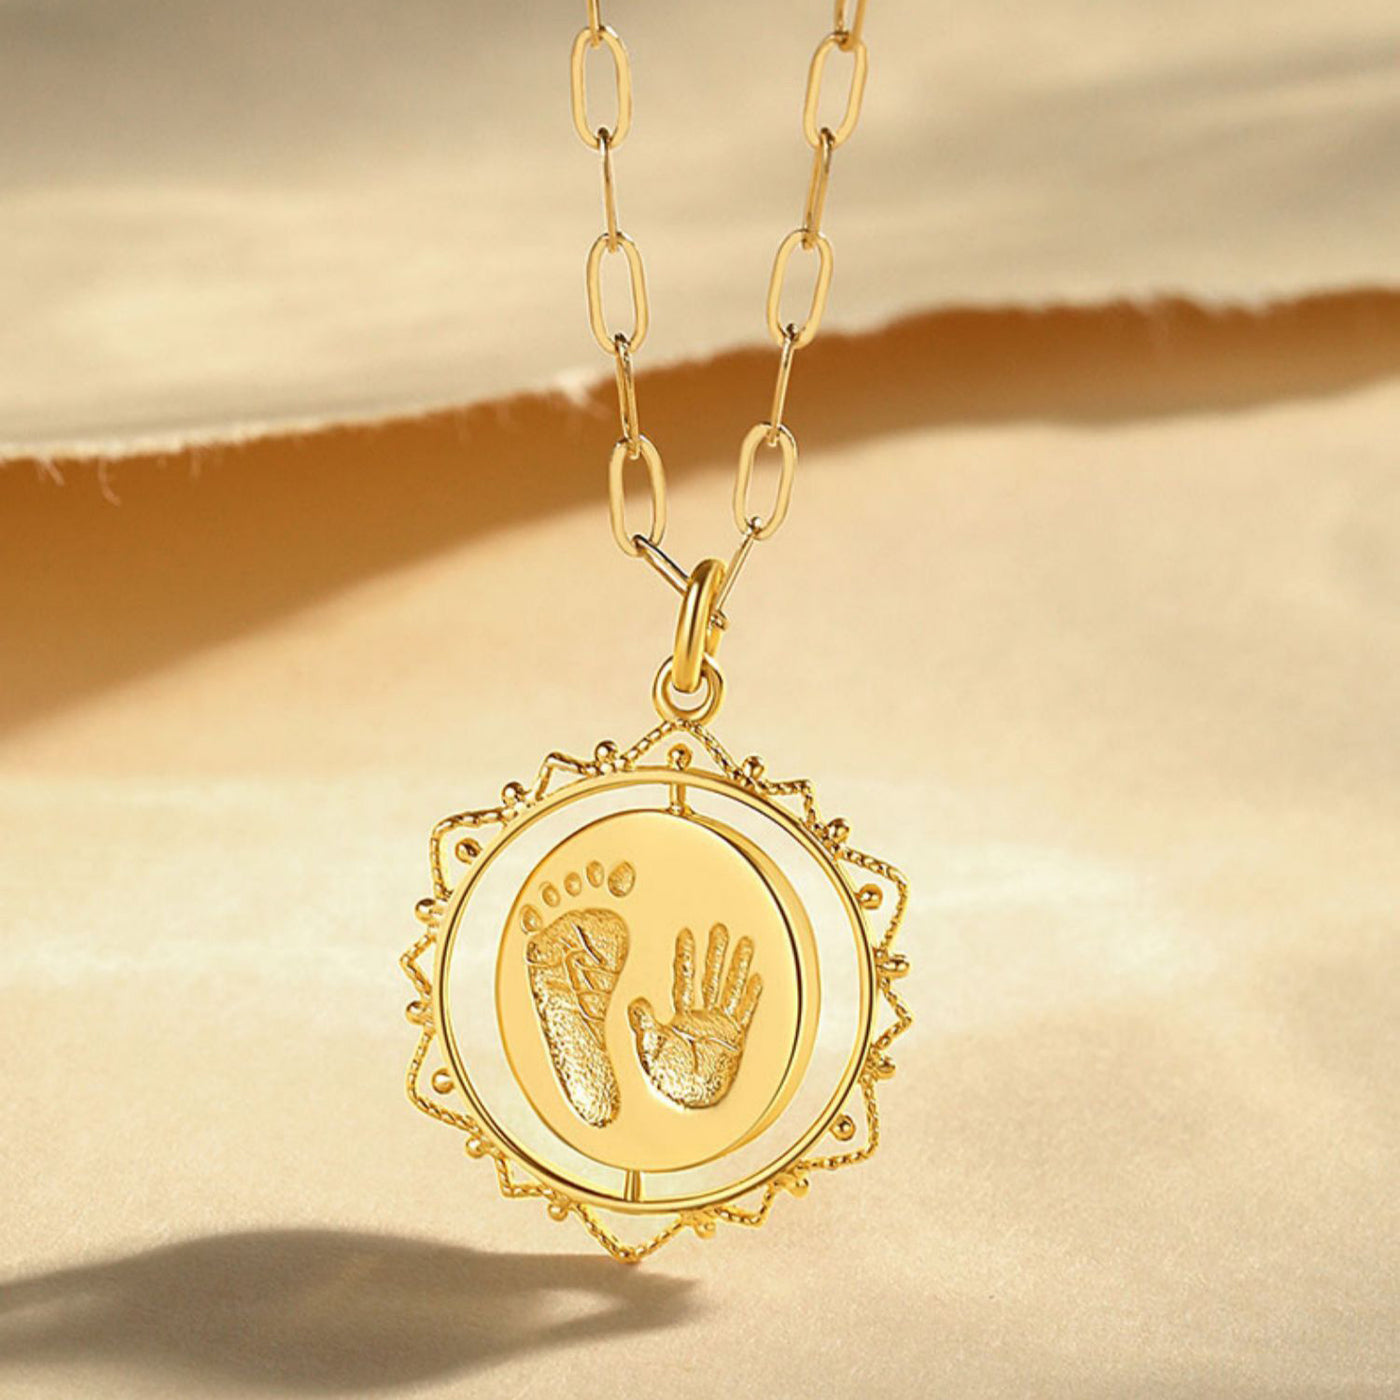 Custom Handprint Footprint Birthday Necklace For baby-Solid 18K Gold